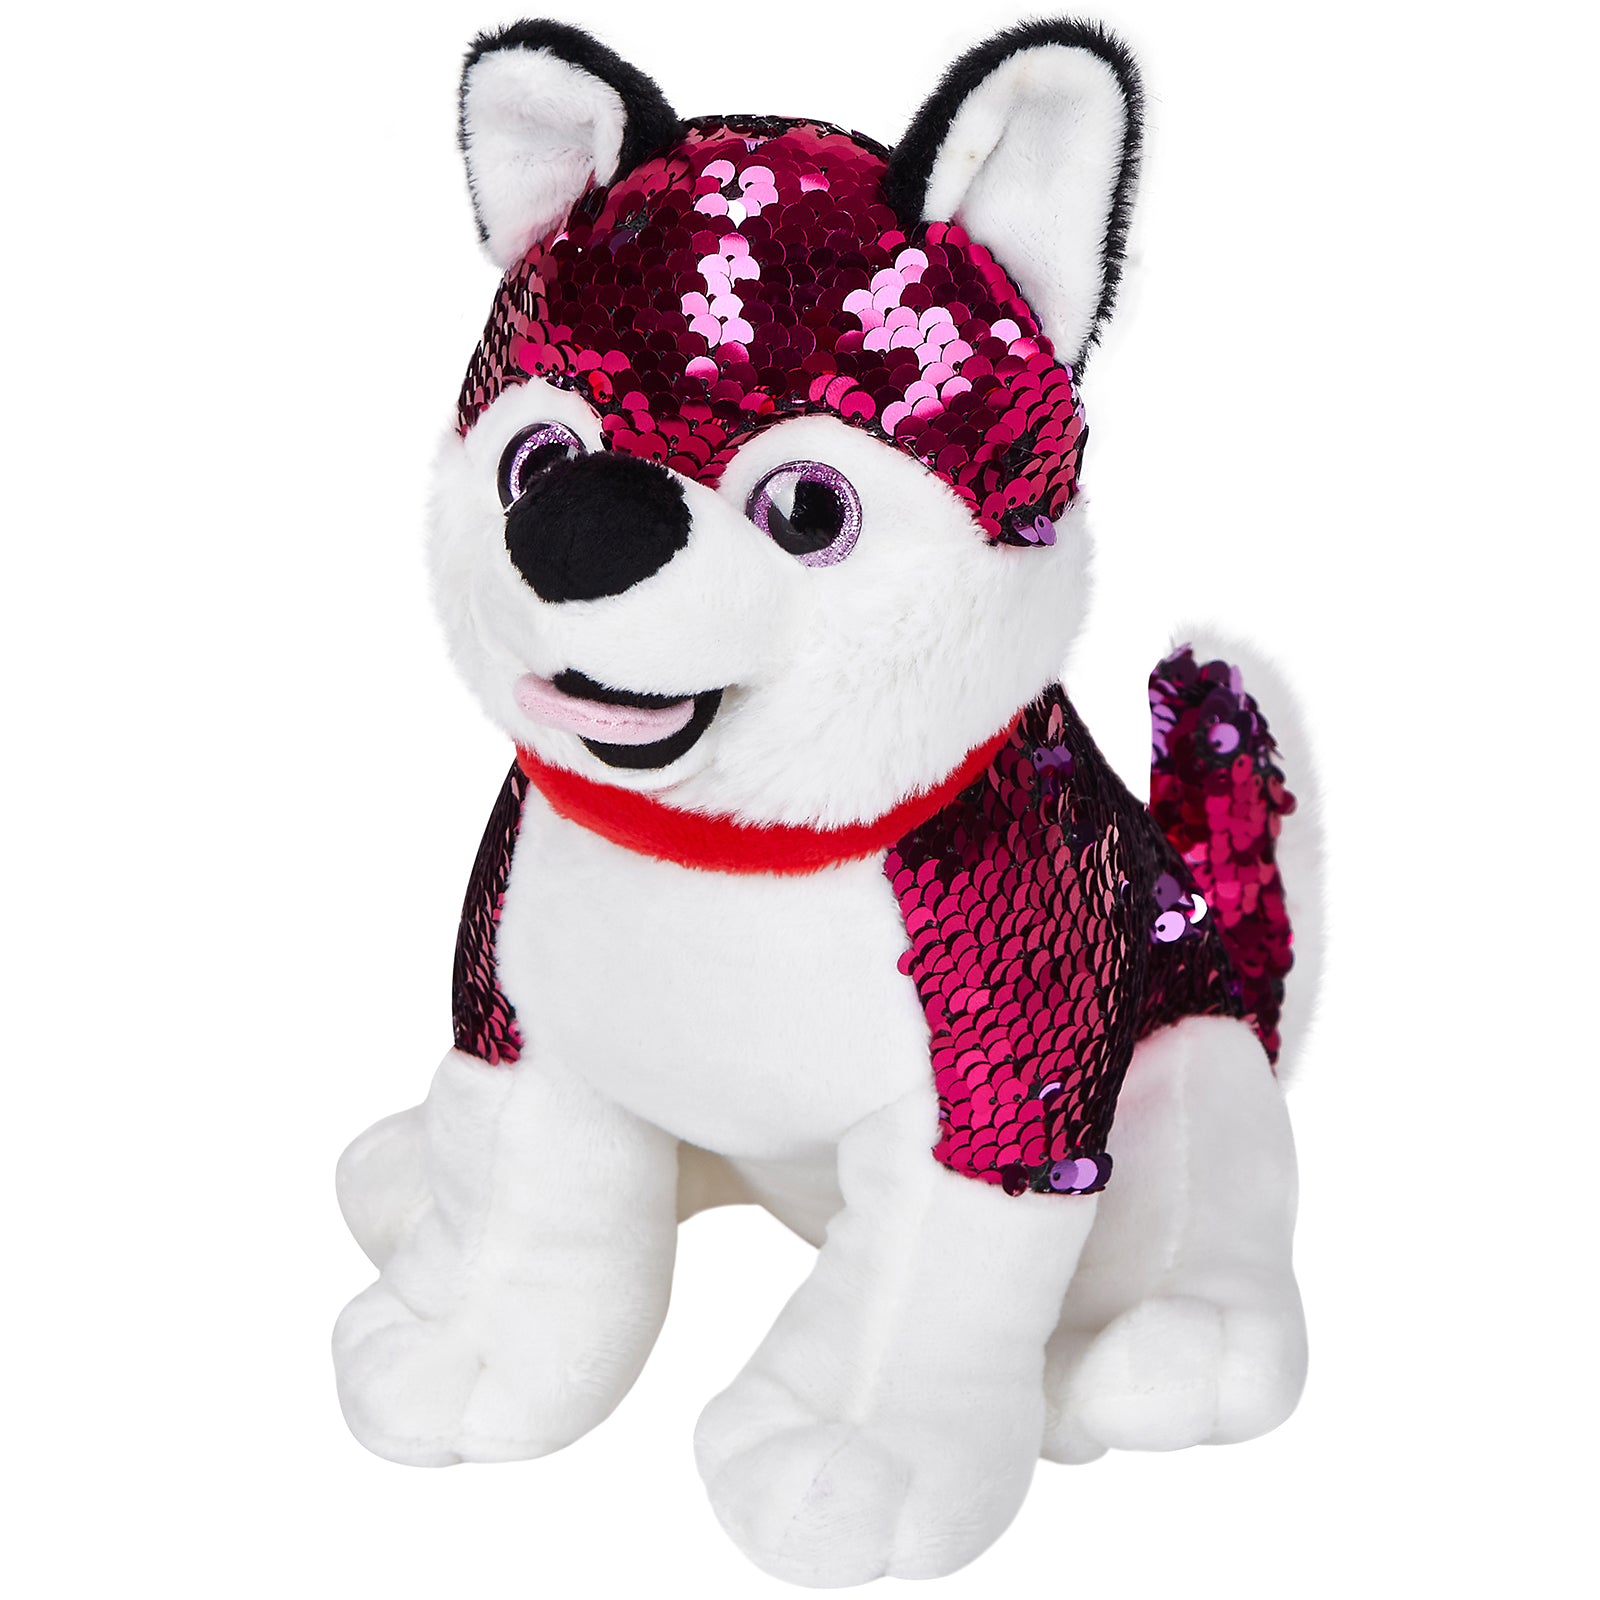 Athoinsu 9'' Flip Sequin Stuffed Husky Puppy Plush - Glow Guards